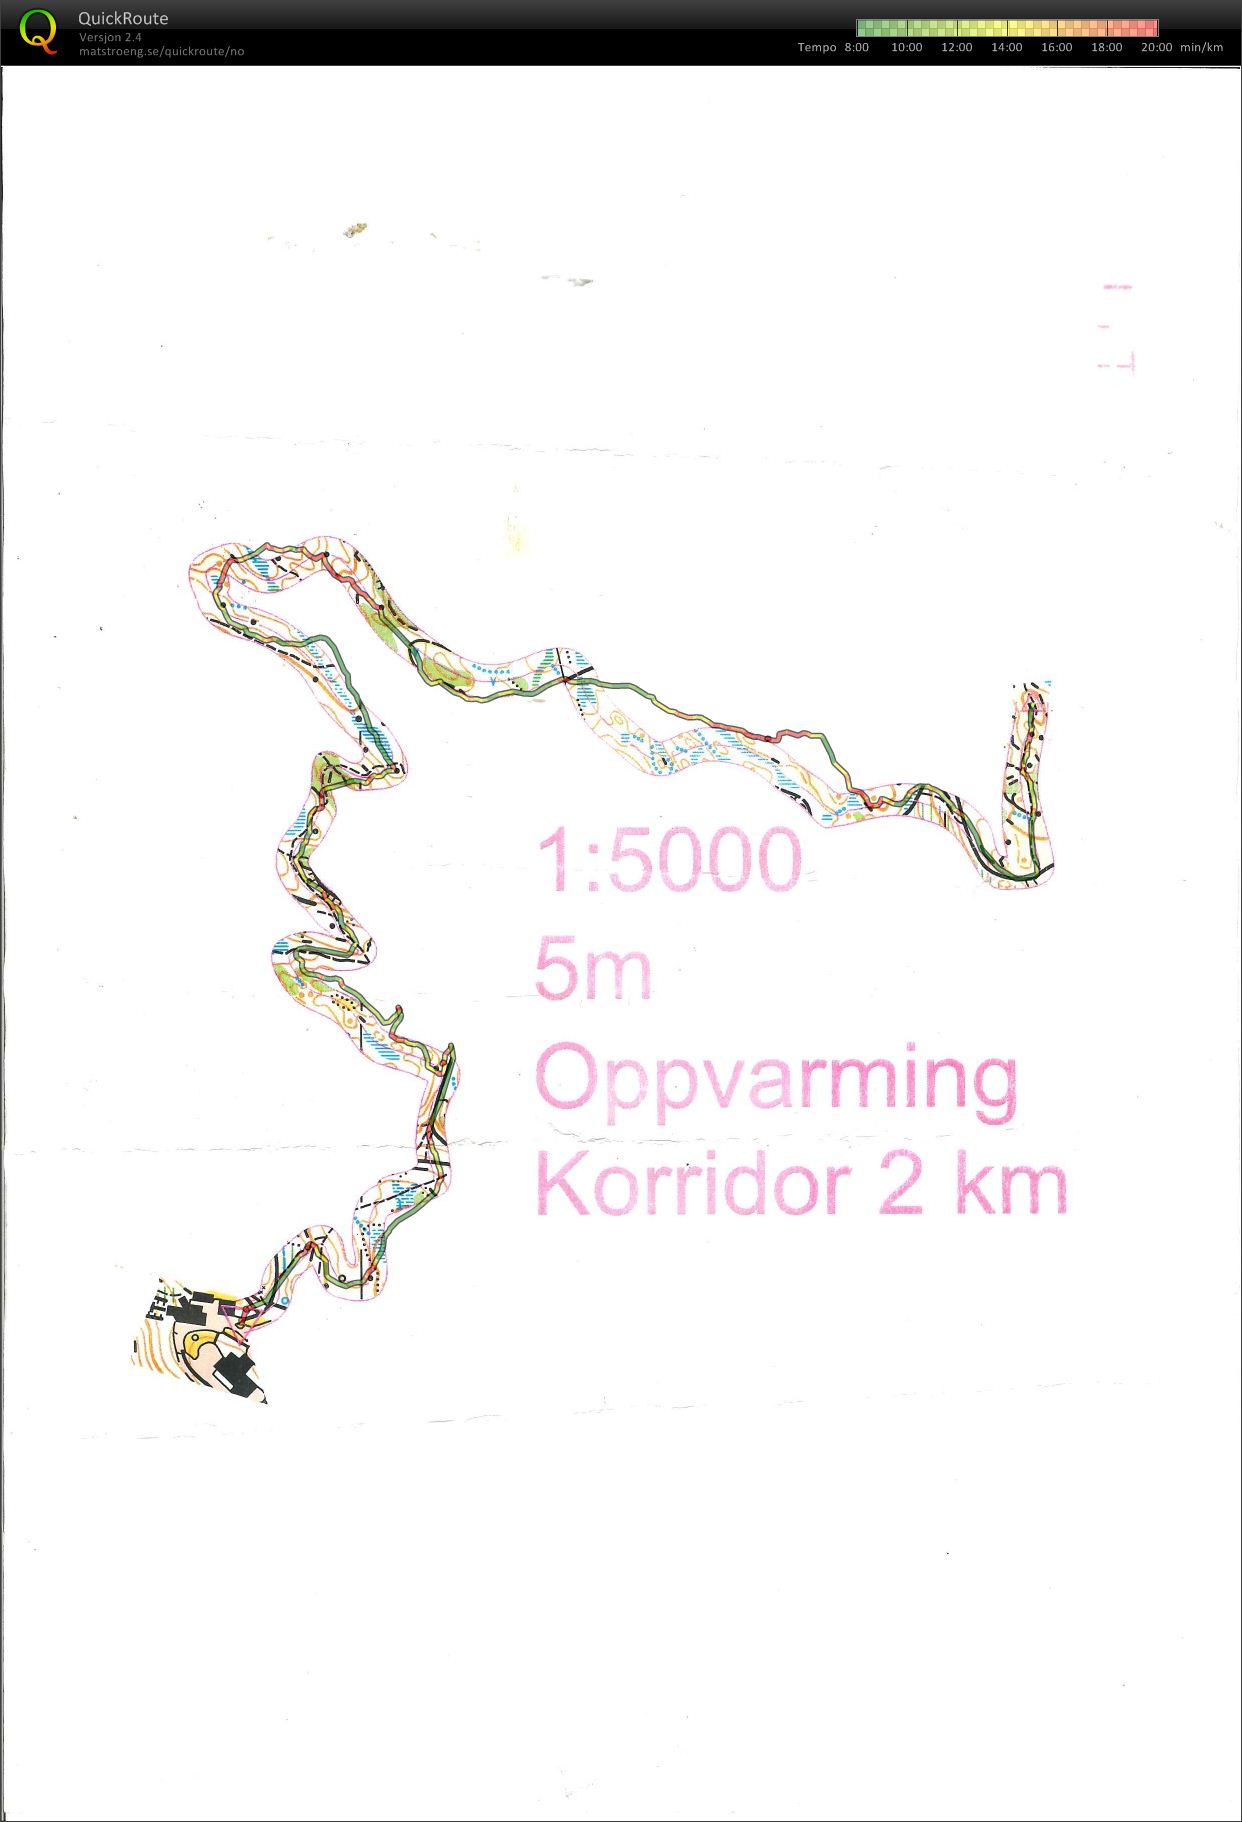 O-korridor Fløyen (18/01/2014)